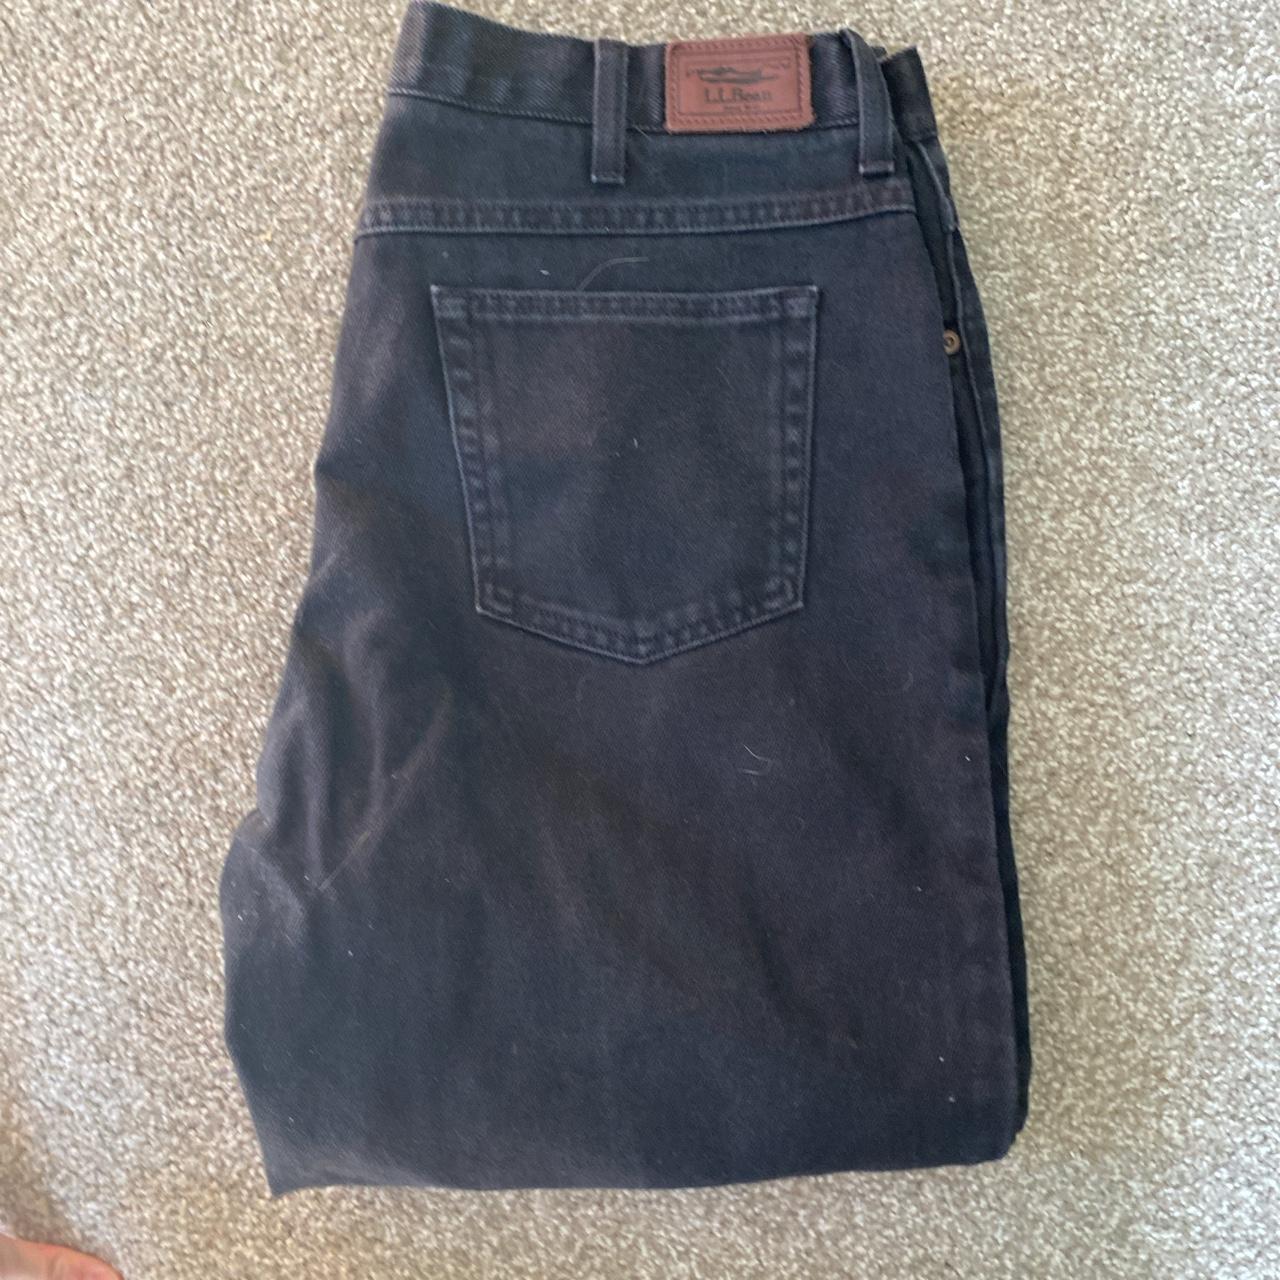 Black ll bean jeans great condition waist 37 length 28 - Depop